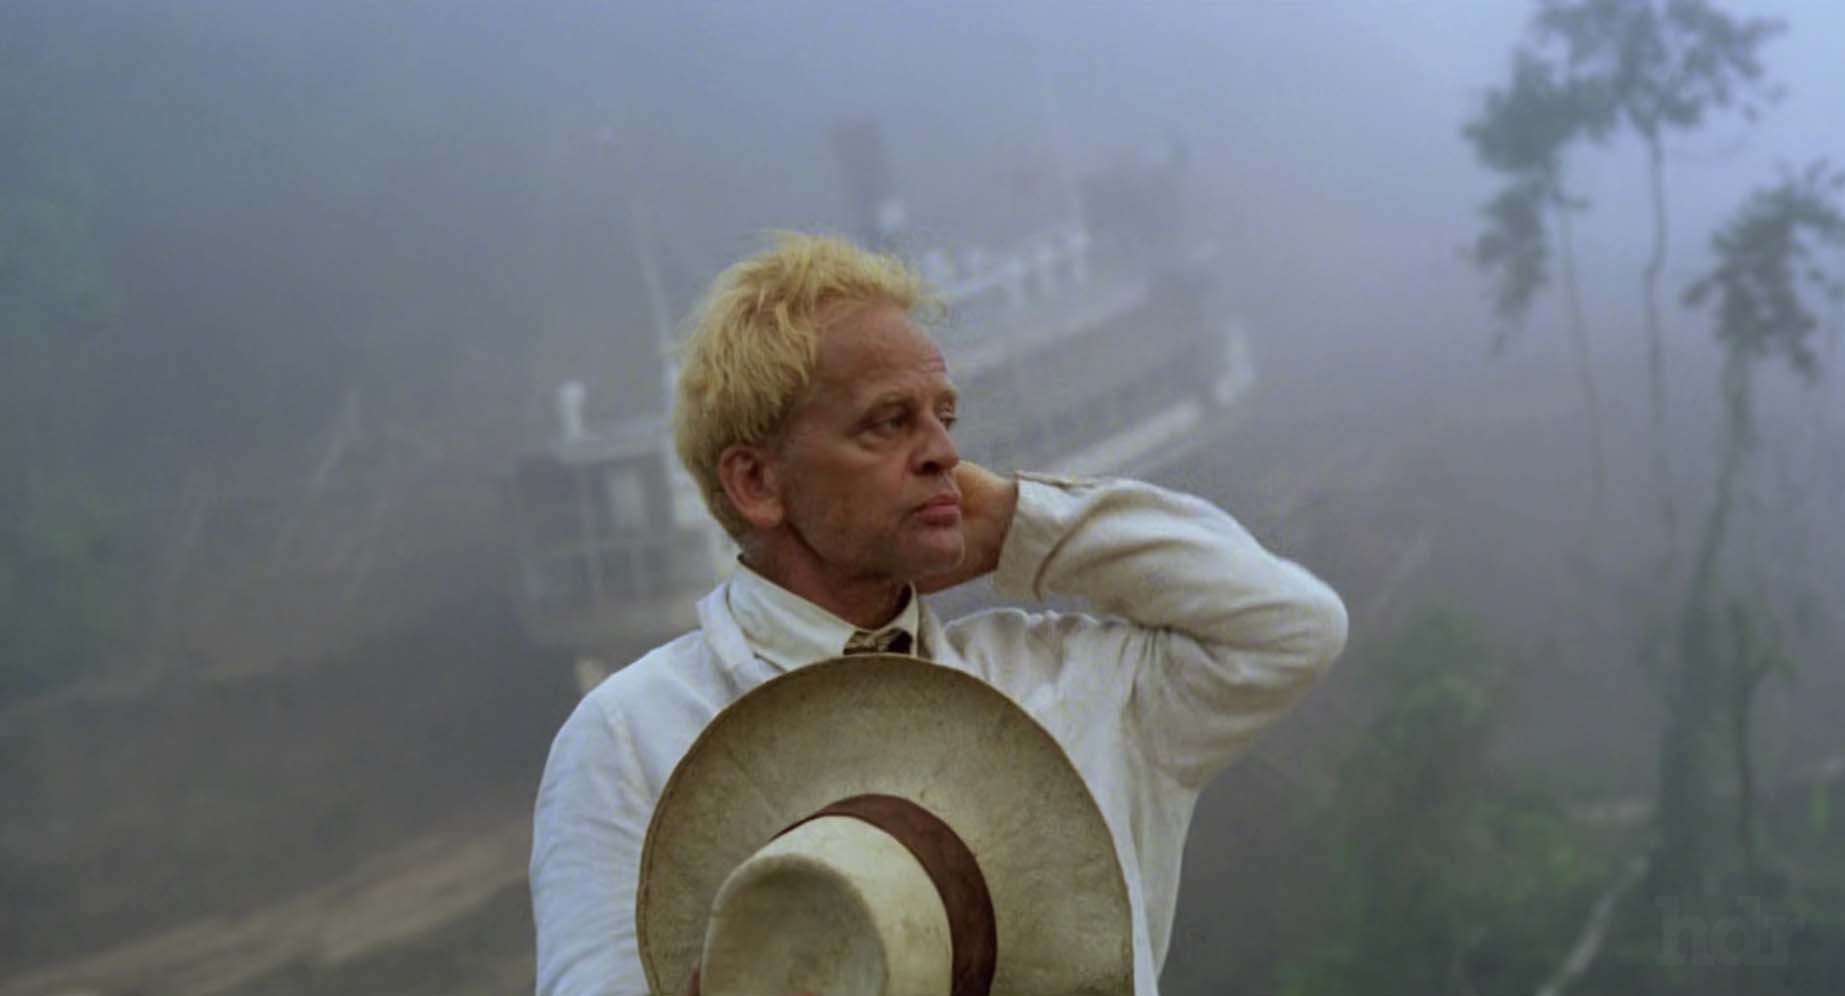 Werner Herzog's Fitzcarraldo (1982) starring Klaus Kinski